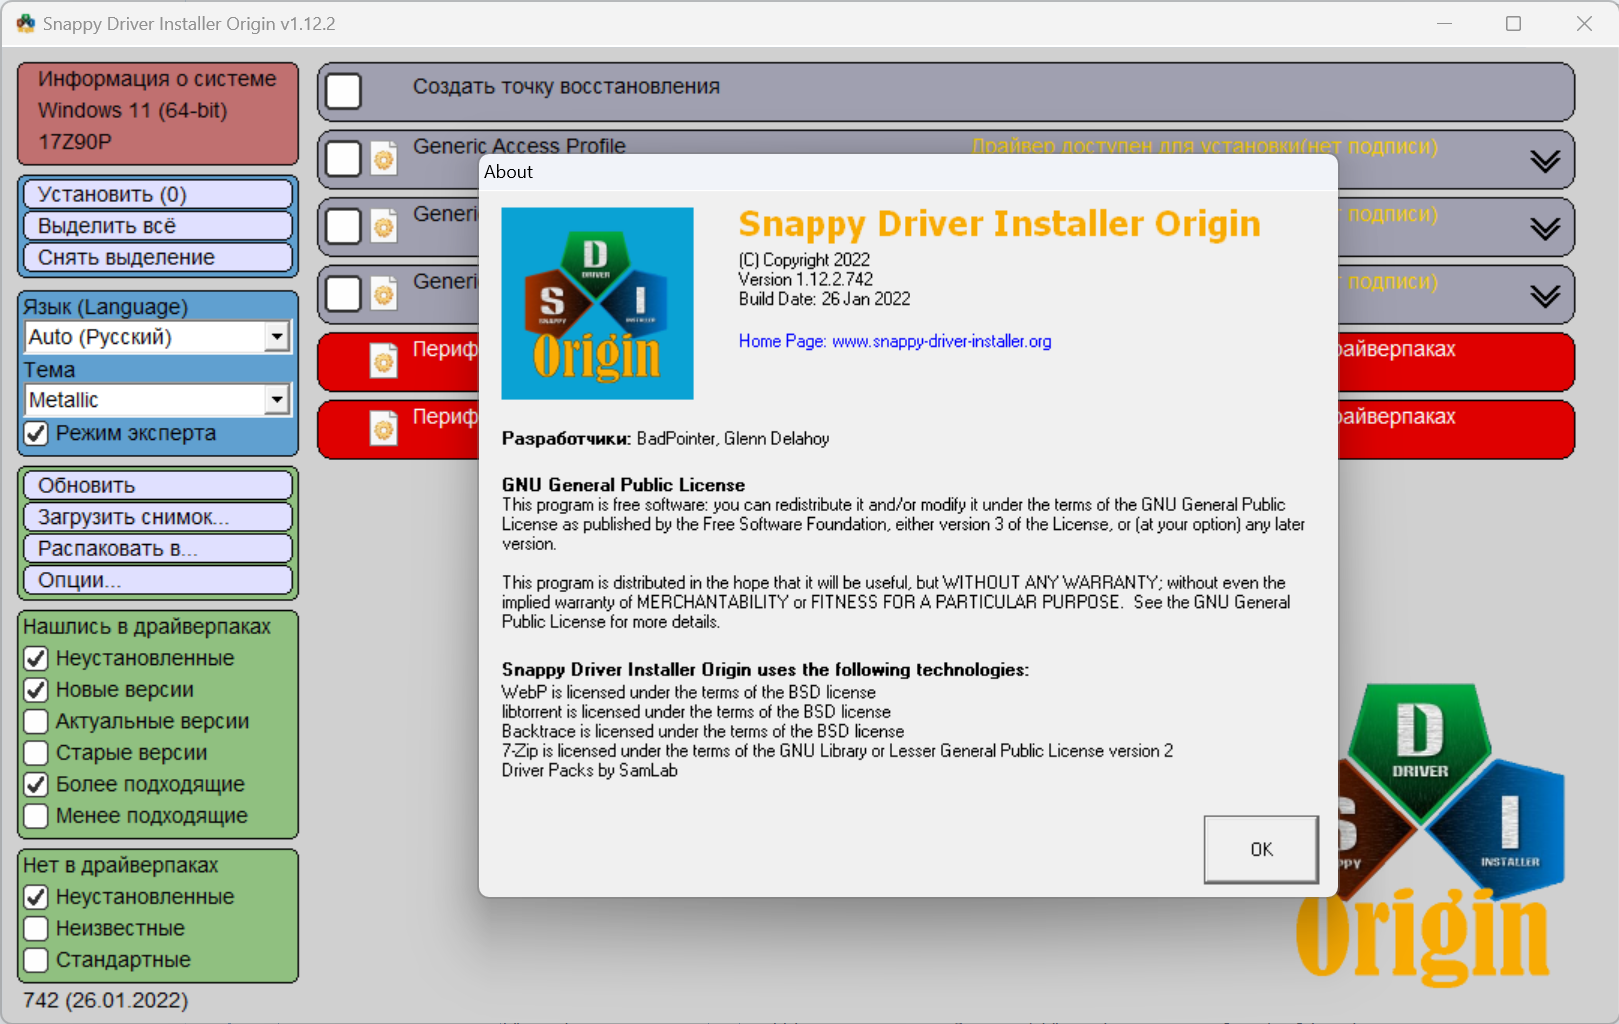 Snappy Driver Installer Origin R742 / Драйверпаки 22.03.2 [Multi/Ru]